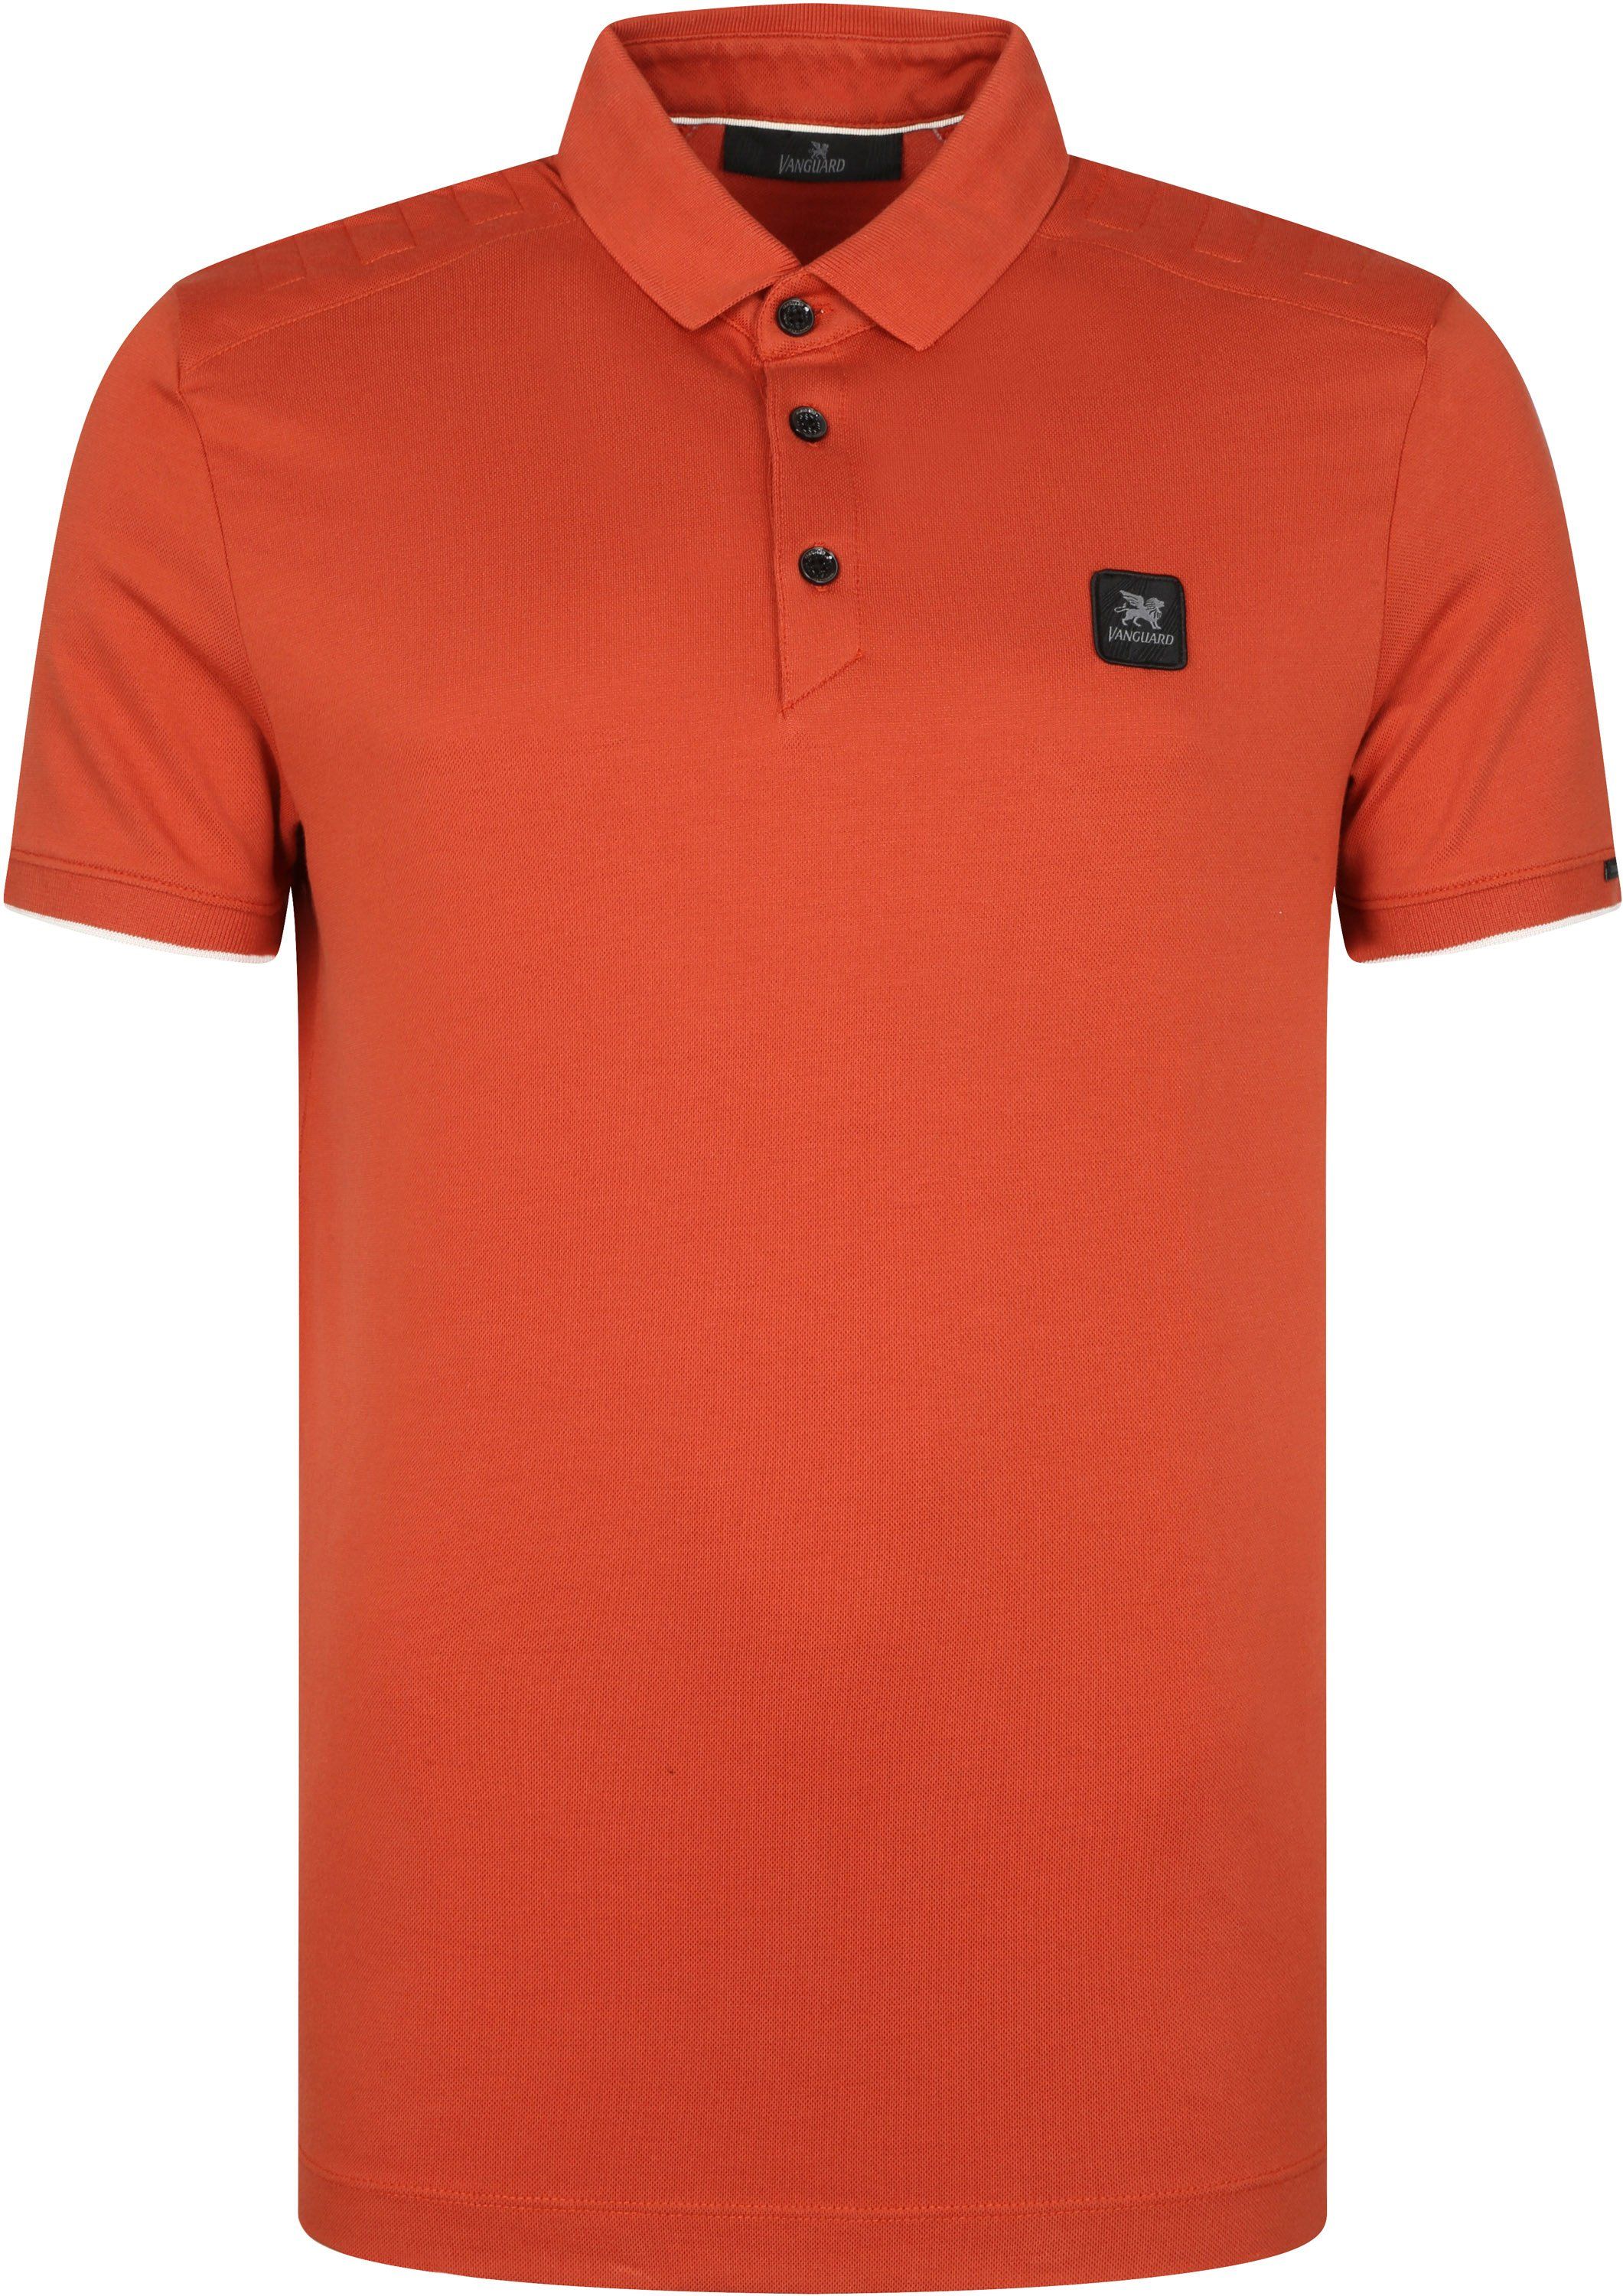 Vanguard Polo Shirt Logo Orange size 3XL